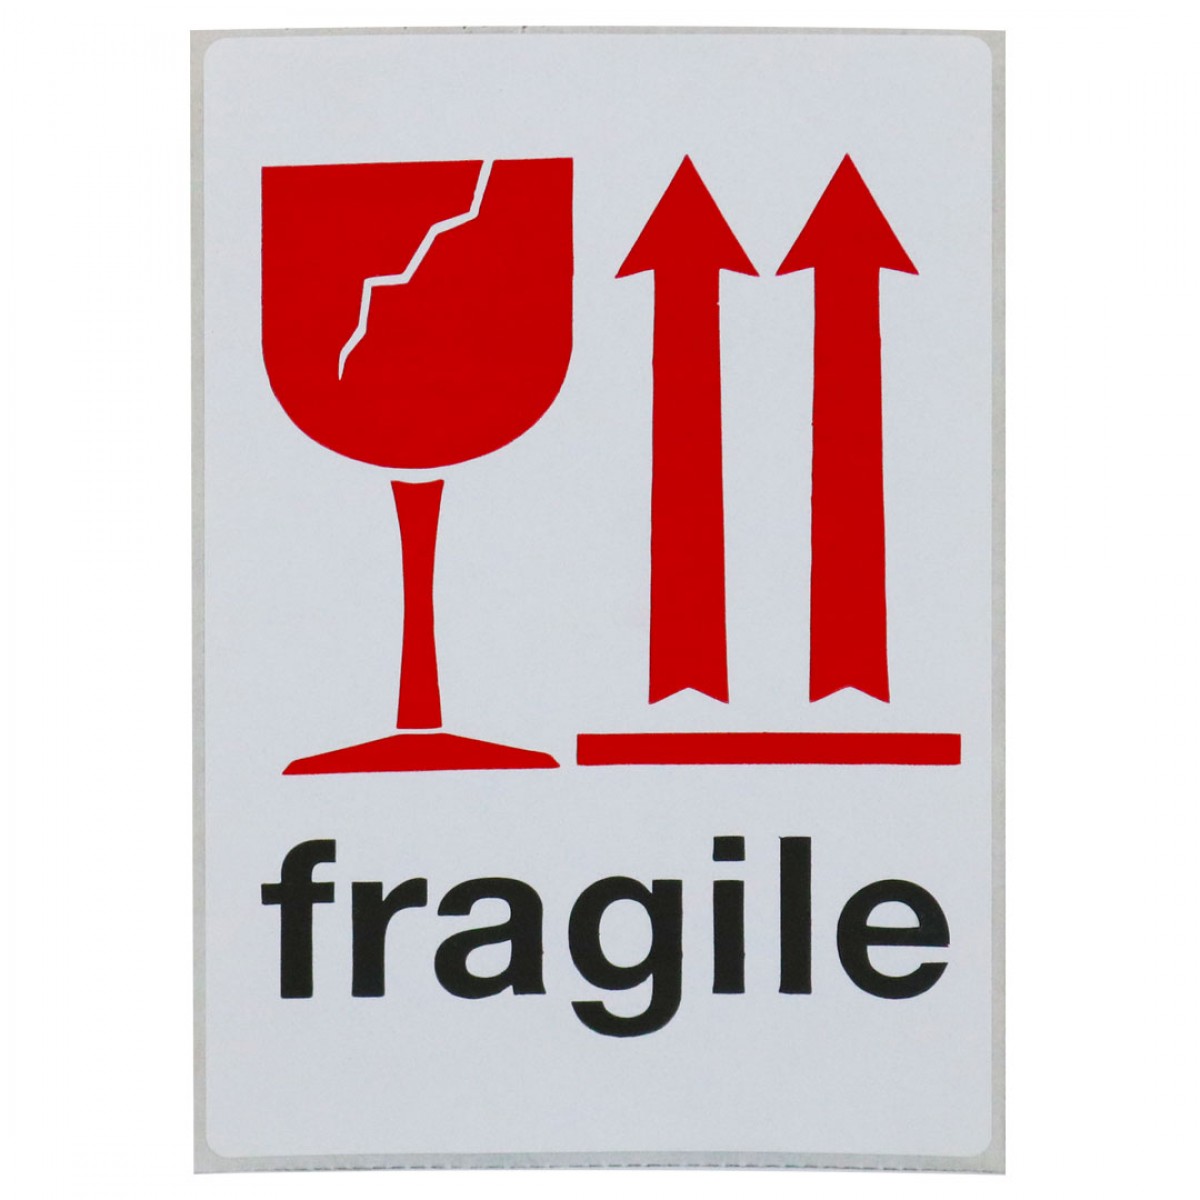 Fragile игра. 4 X 6 fragile Labels. Fragile перевод. Fragility перевод.